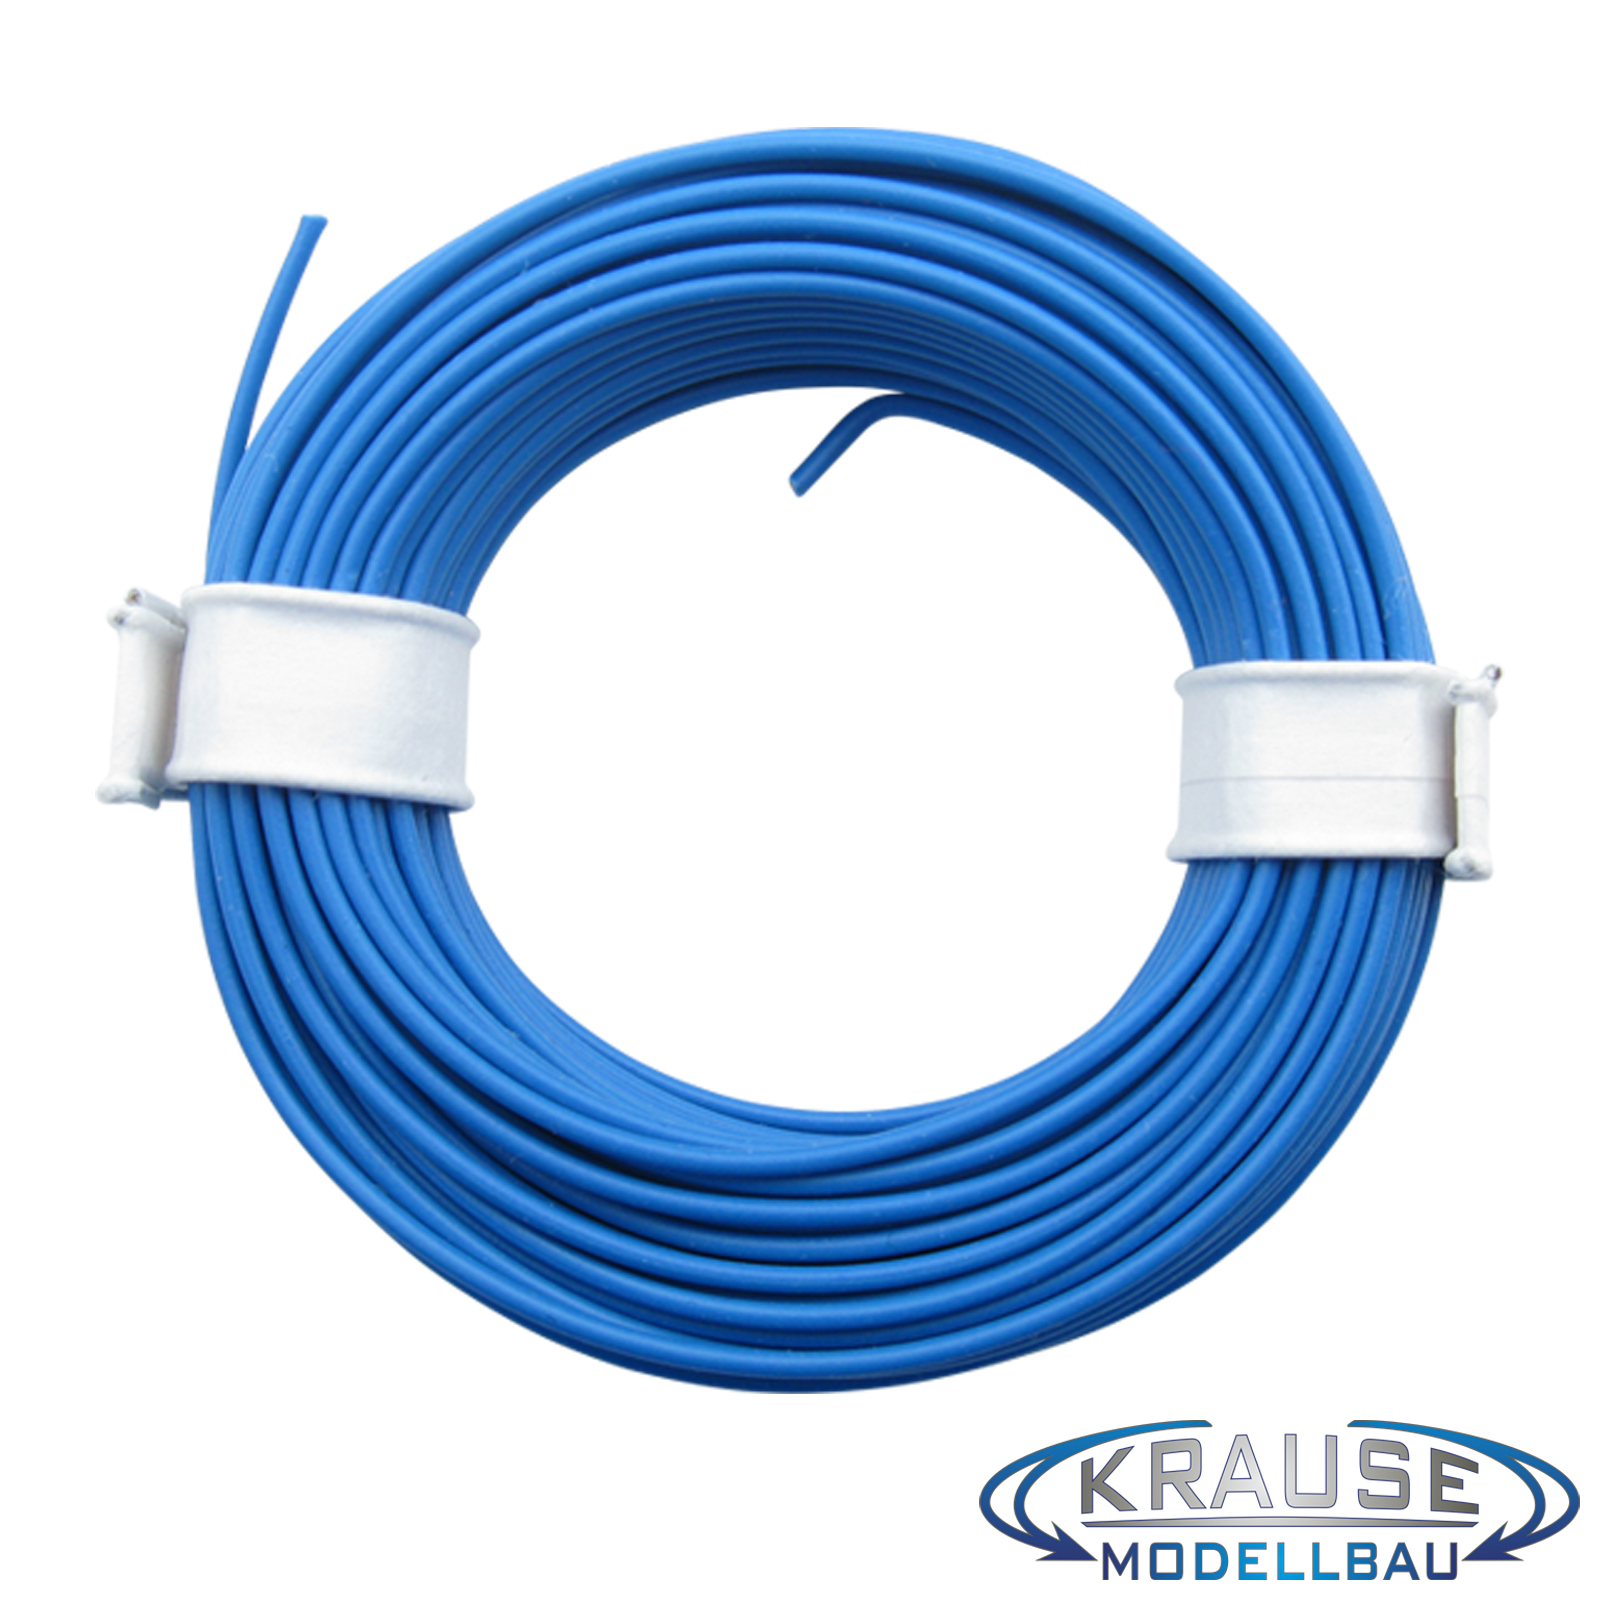 Schaltlitze Miniaturkabel Litze flexibel LIY 0,25 mm² blau 10 Meter Ring -  Krause Modellbau